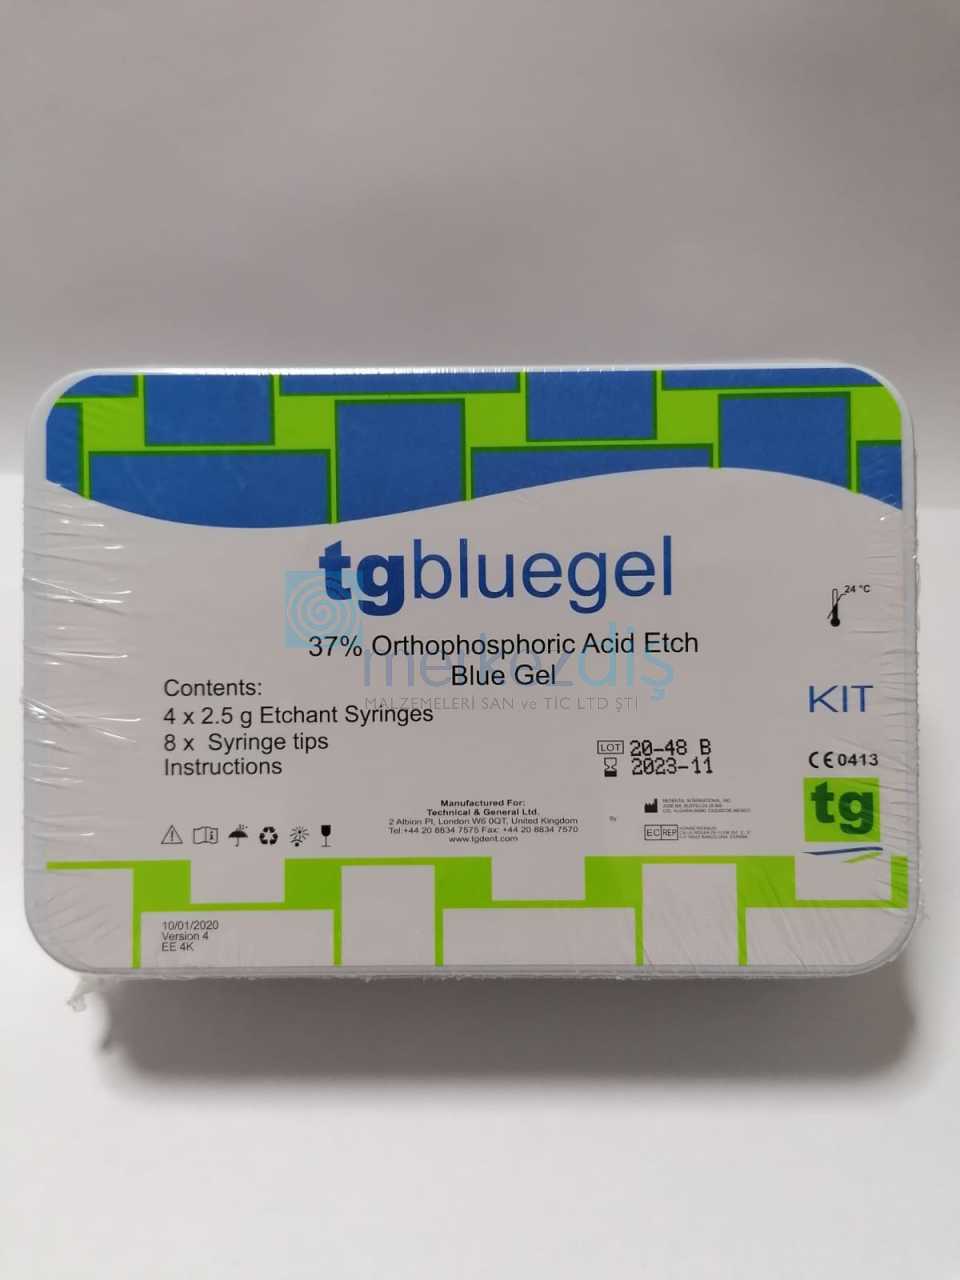 TG Bluegel Etchant Fosforik Asit 4x2.5 gr